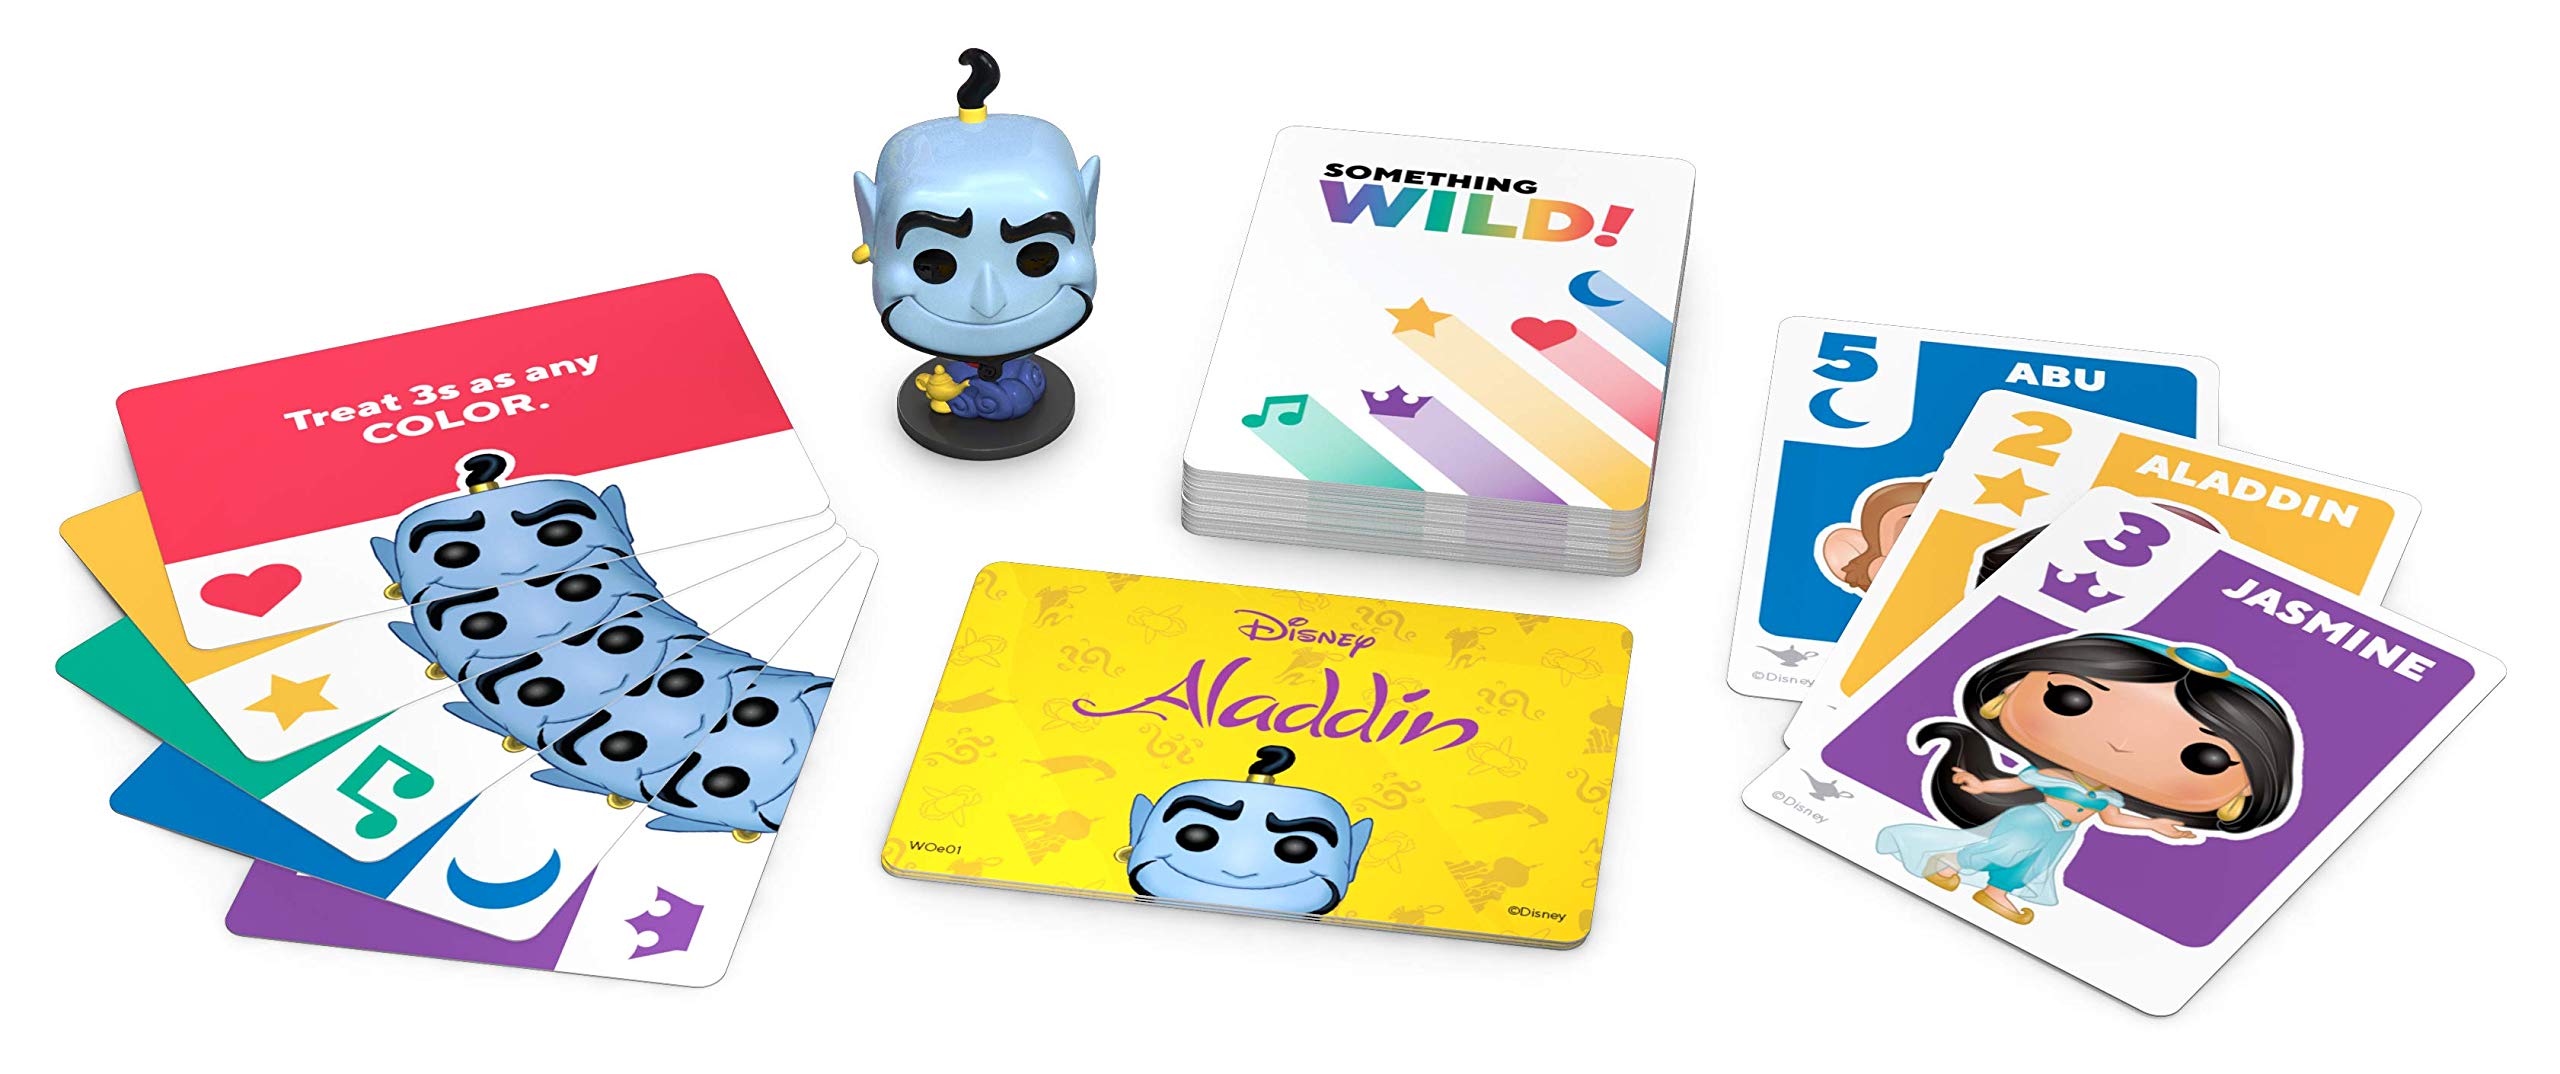 Funko Something Wild! Disney Aladdin - Genie Card Game - Christmas Stocking Stuffer